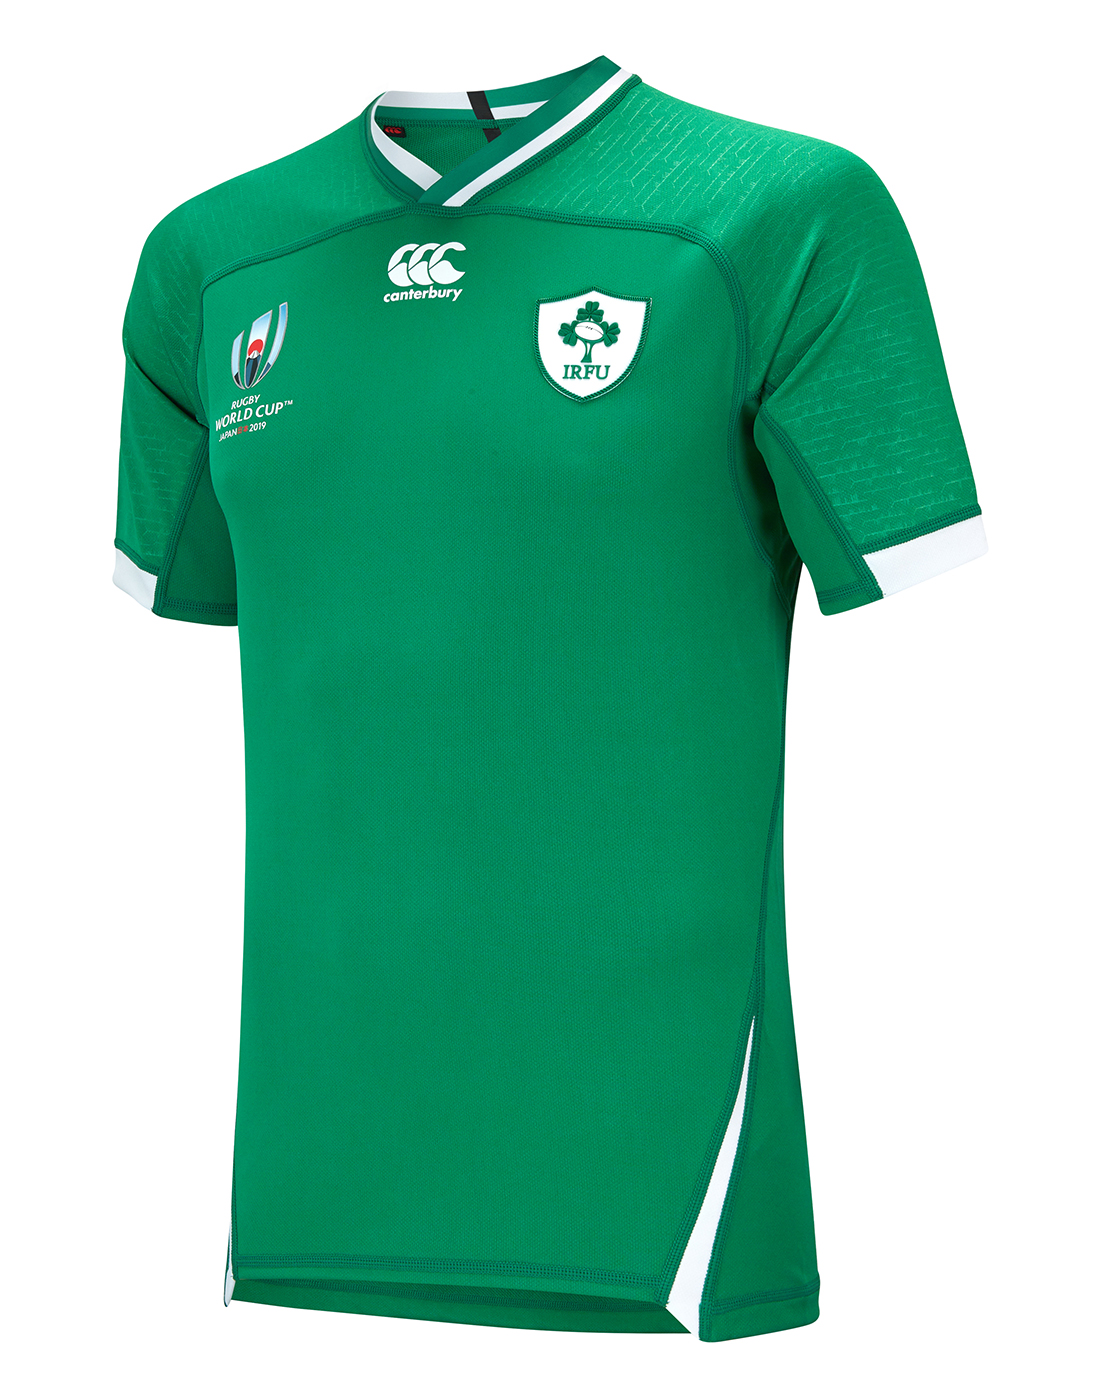 irish rugby merchandise